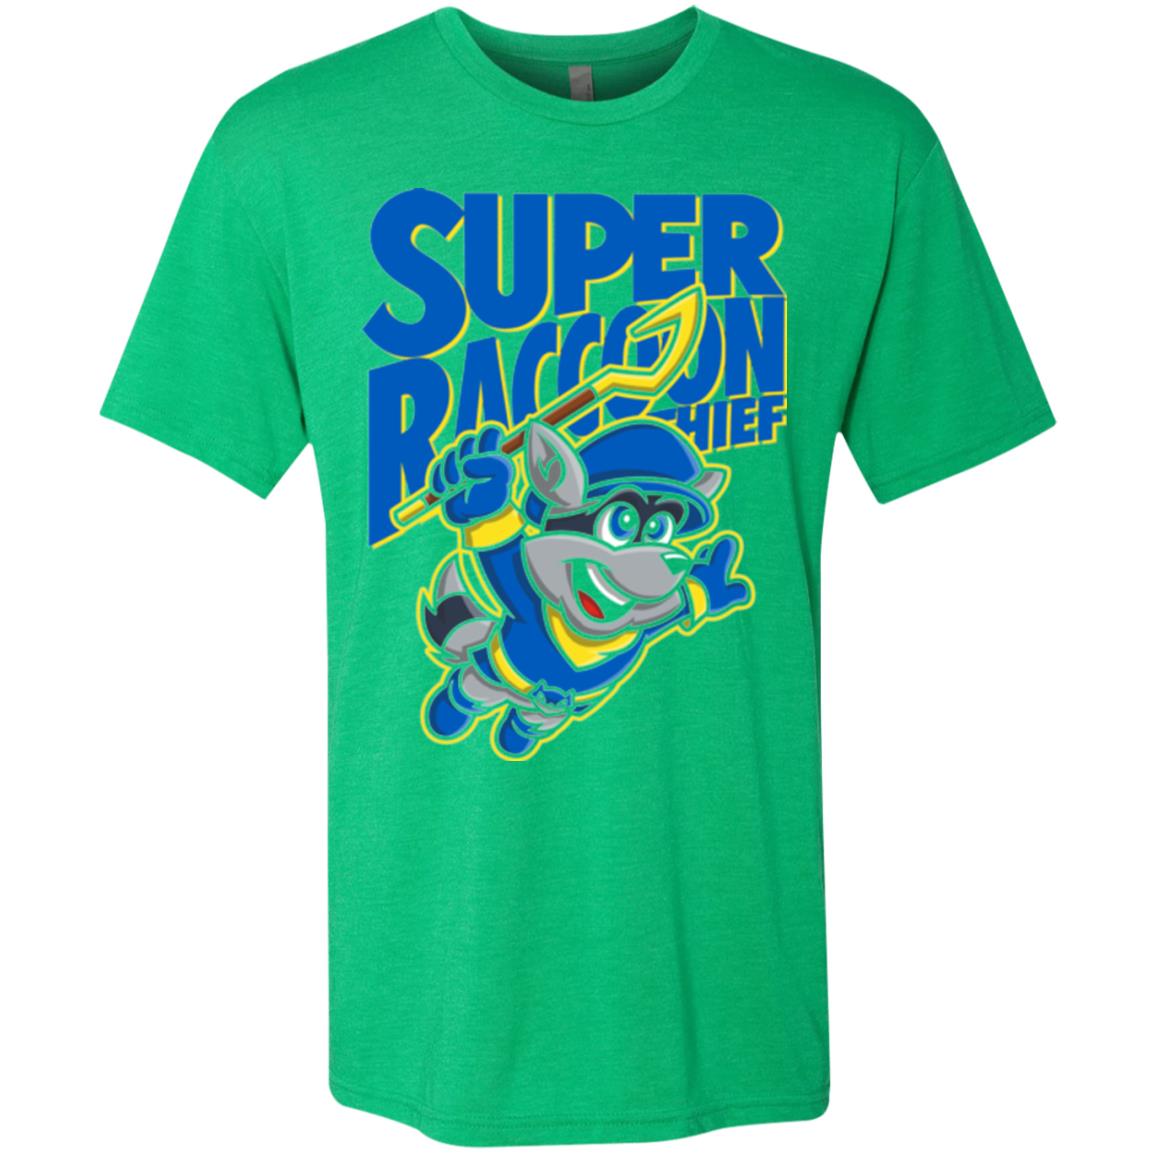 Super Racoon Thief Men's Triblend T-Shirt